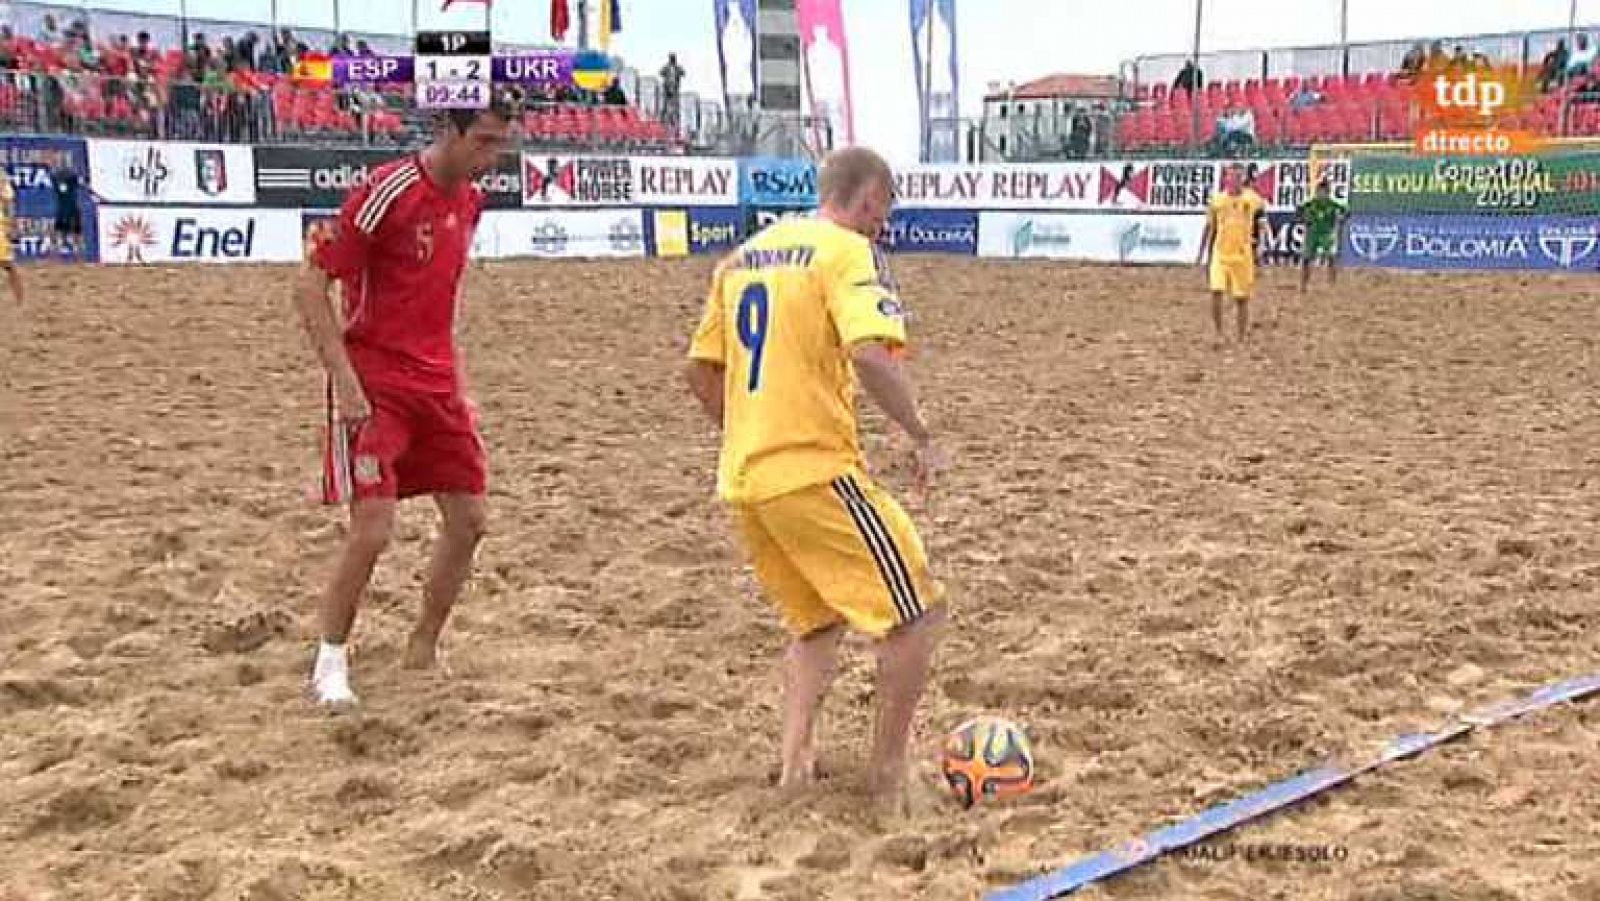 Fútbol playa - Clasificación Campeonato del Mundo zona europea. 2ª Fase. España - Ucrania